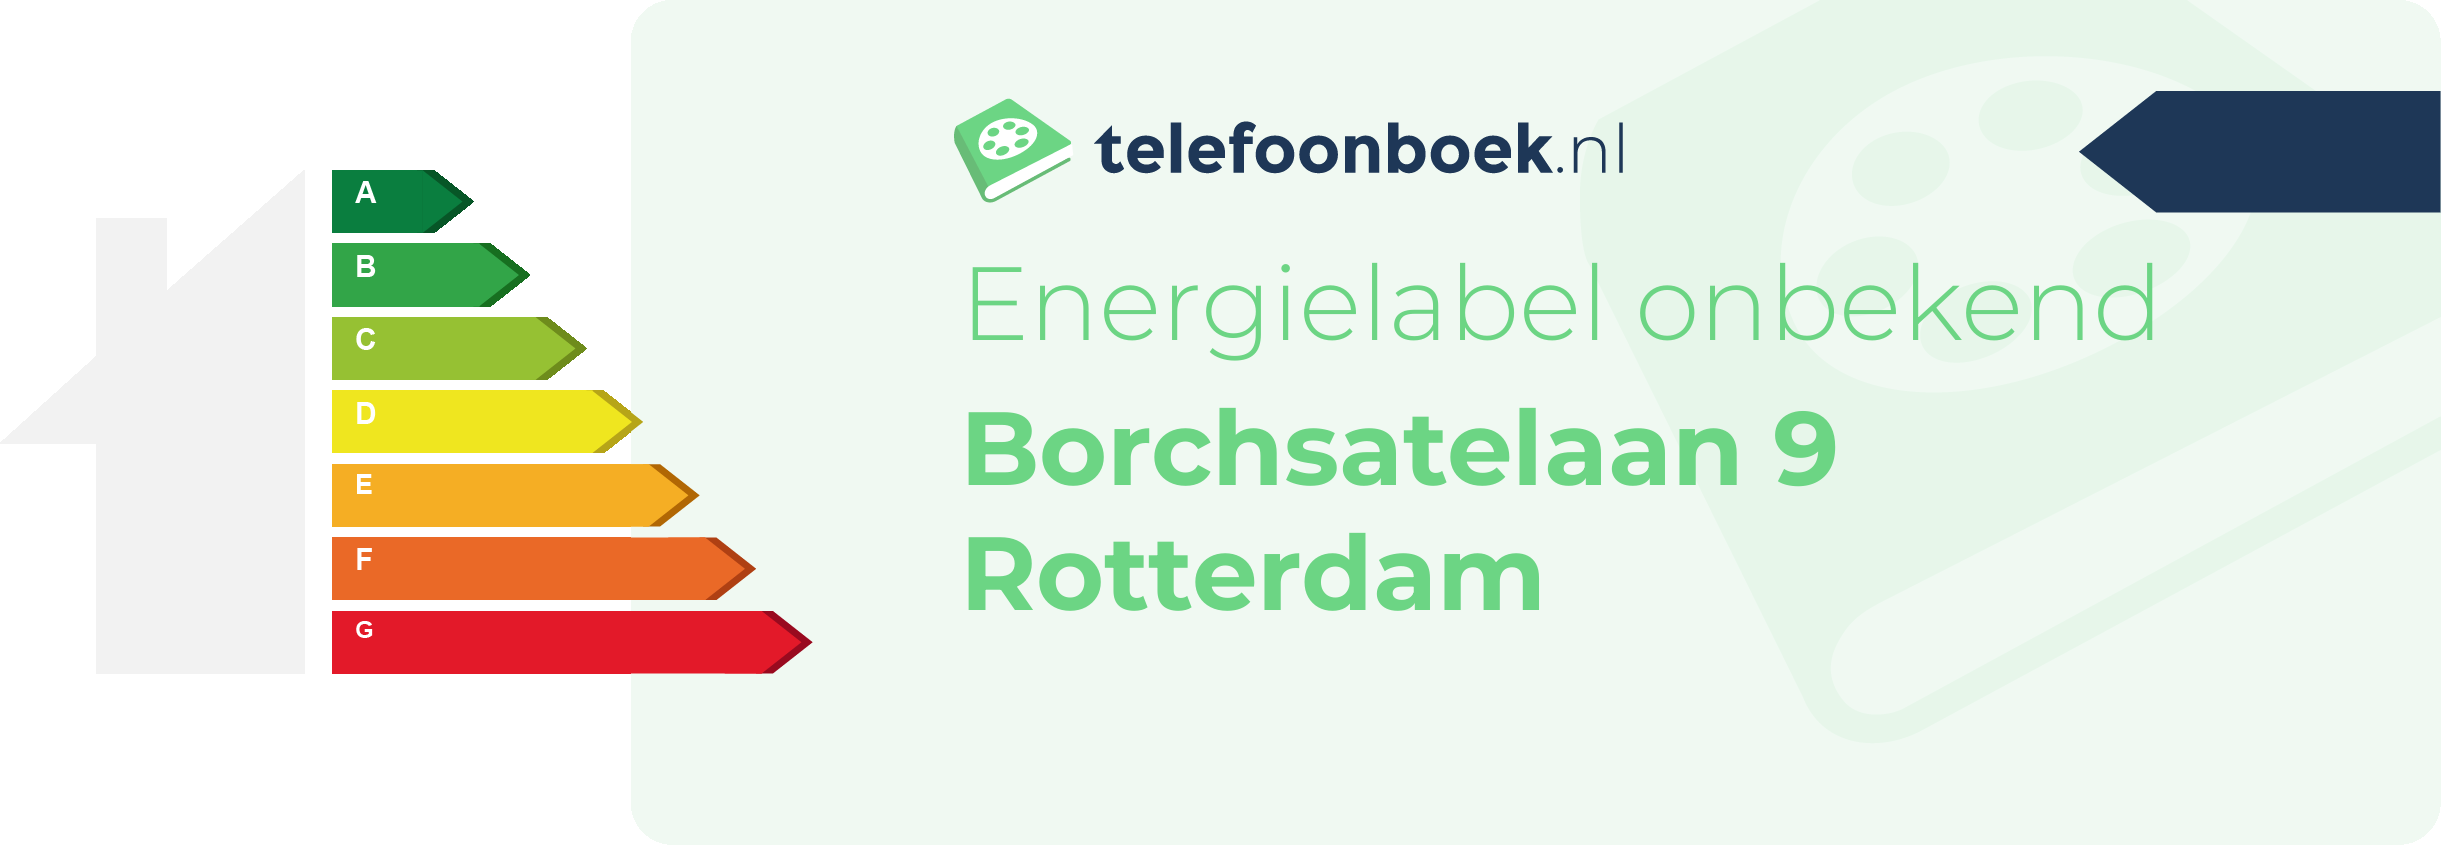 Energielabel Borchsatelaan 9 Rotterdam